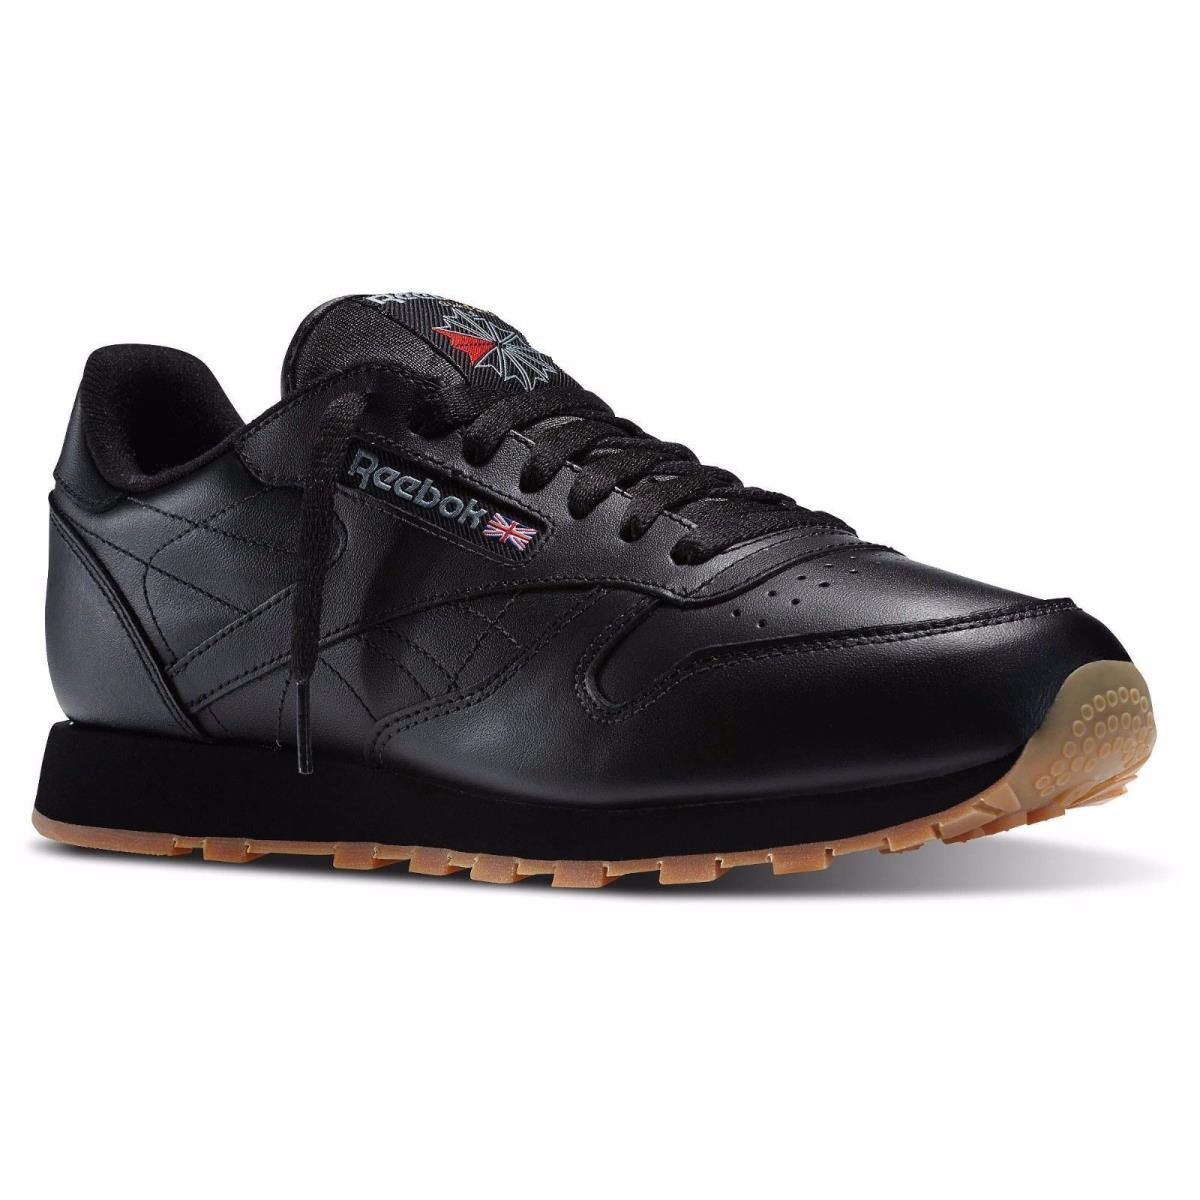 Reebok Classic Leather Black Gum 49798 Mens Classic Running Shoes